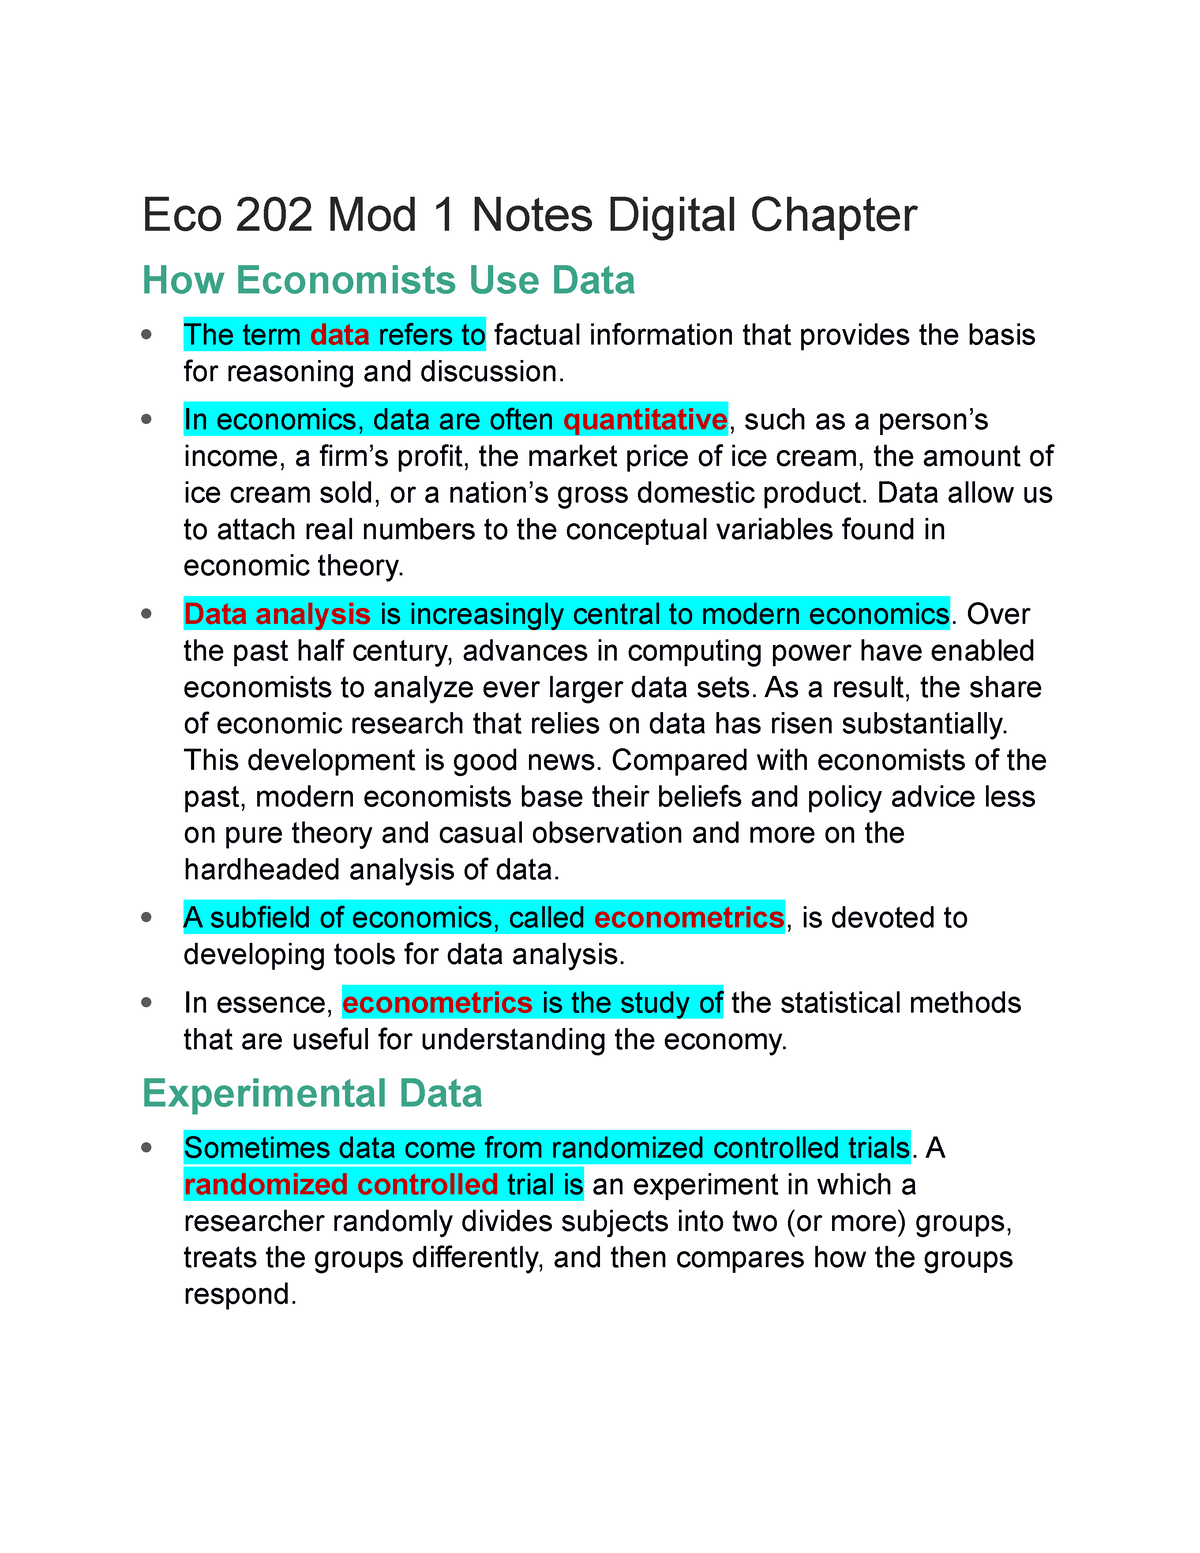 Eco 202 Module 1 Notes Digital Chapter Eco 202 Mod 1 Notes Digital